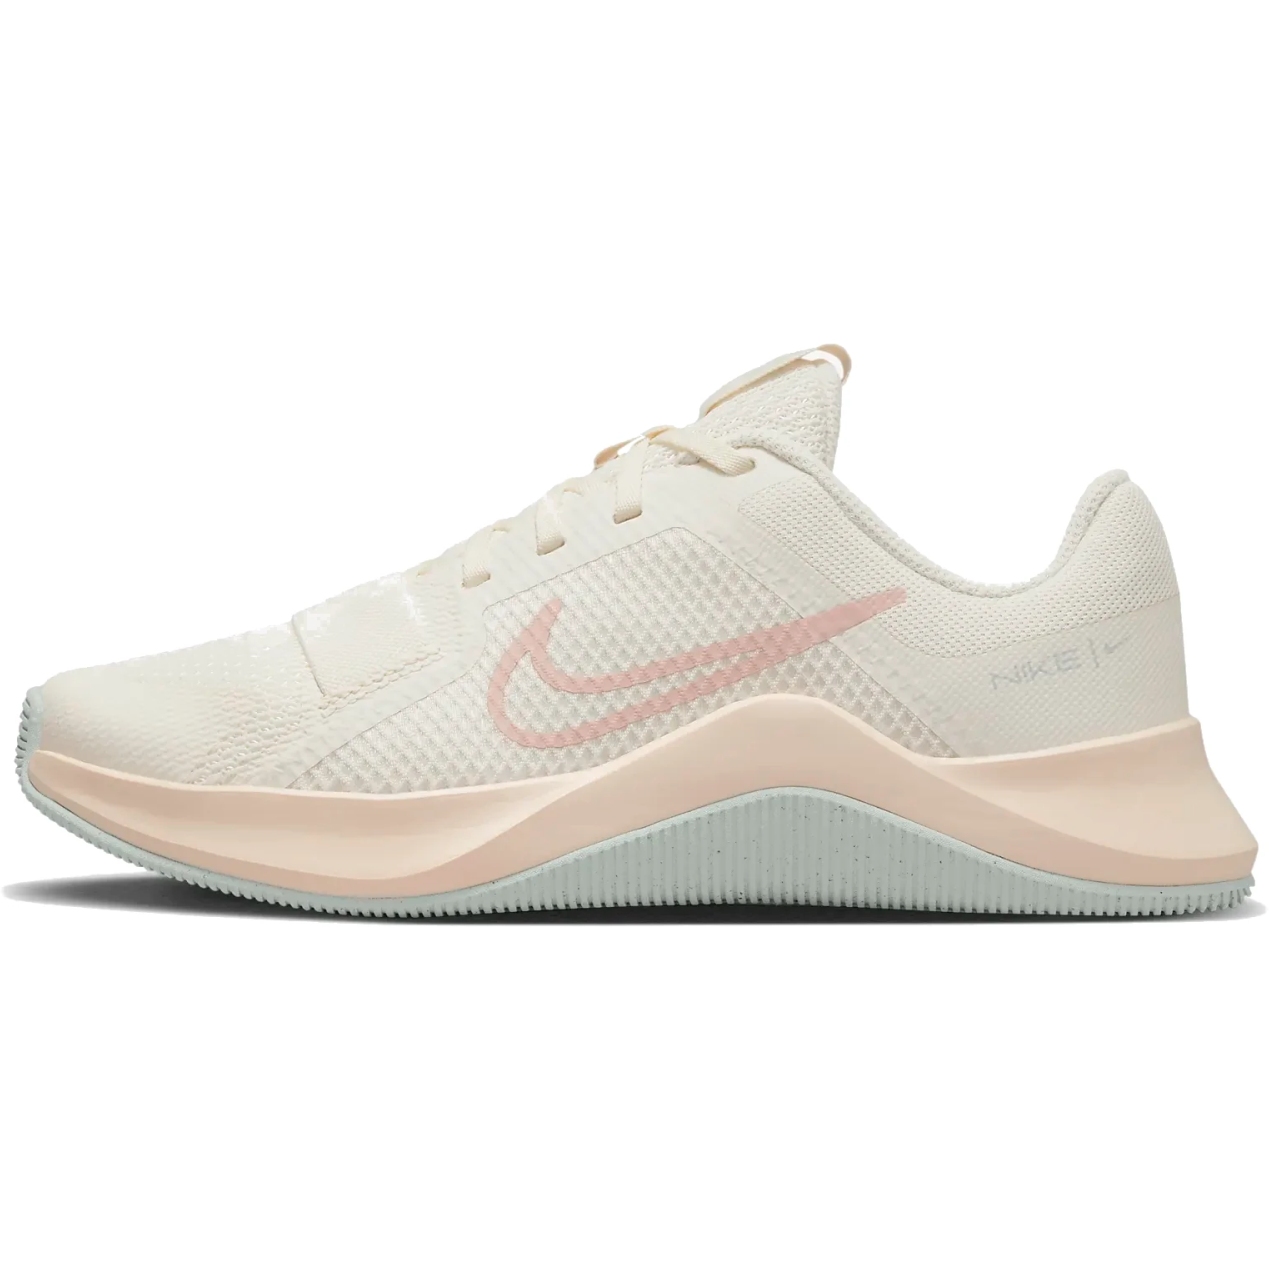 Productfoto van Nike MC Trainer 2 Schoenen Dames - pale ivory/guava ice/light silver/pink oxford DM0824-104